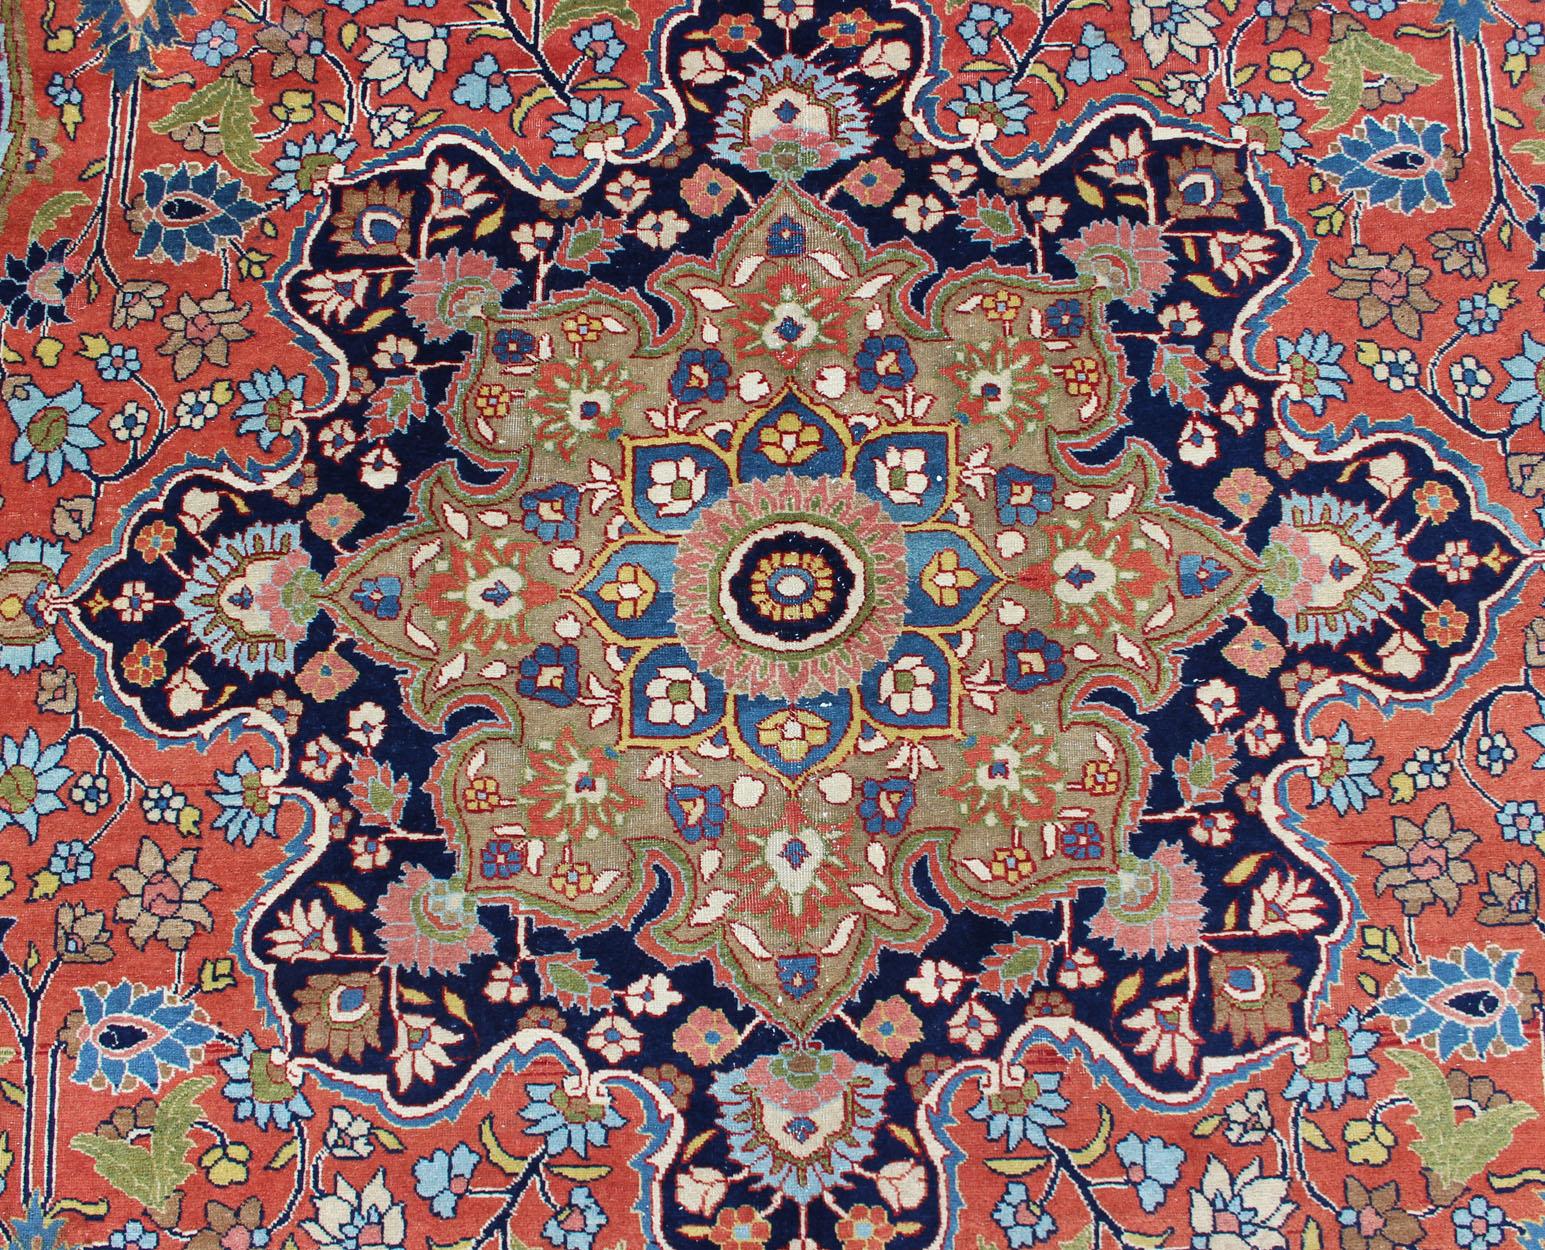 Antique Fine Persian Classic Design Tabriz Rug in Orange, Blue & Multi Colors For Sale 5